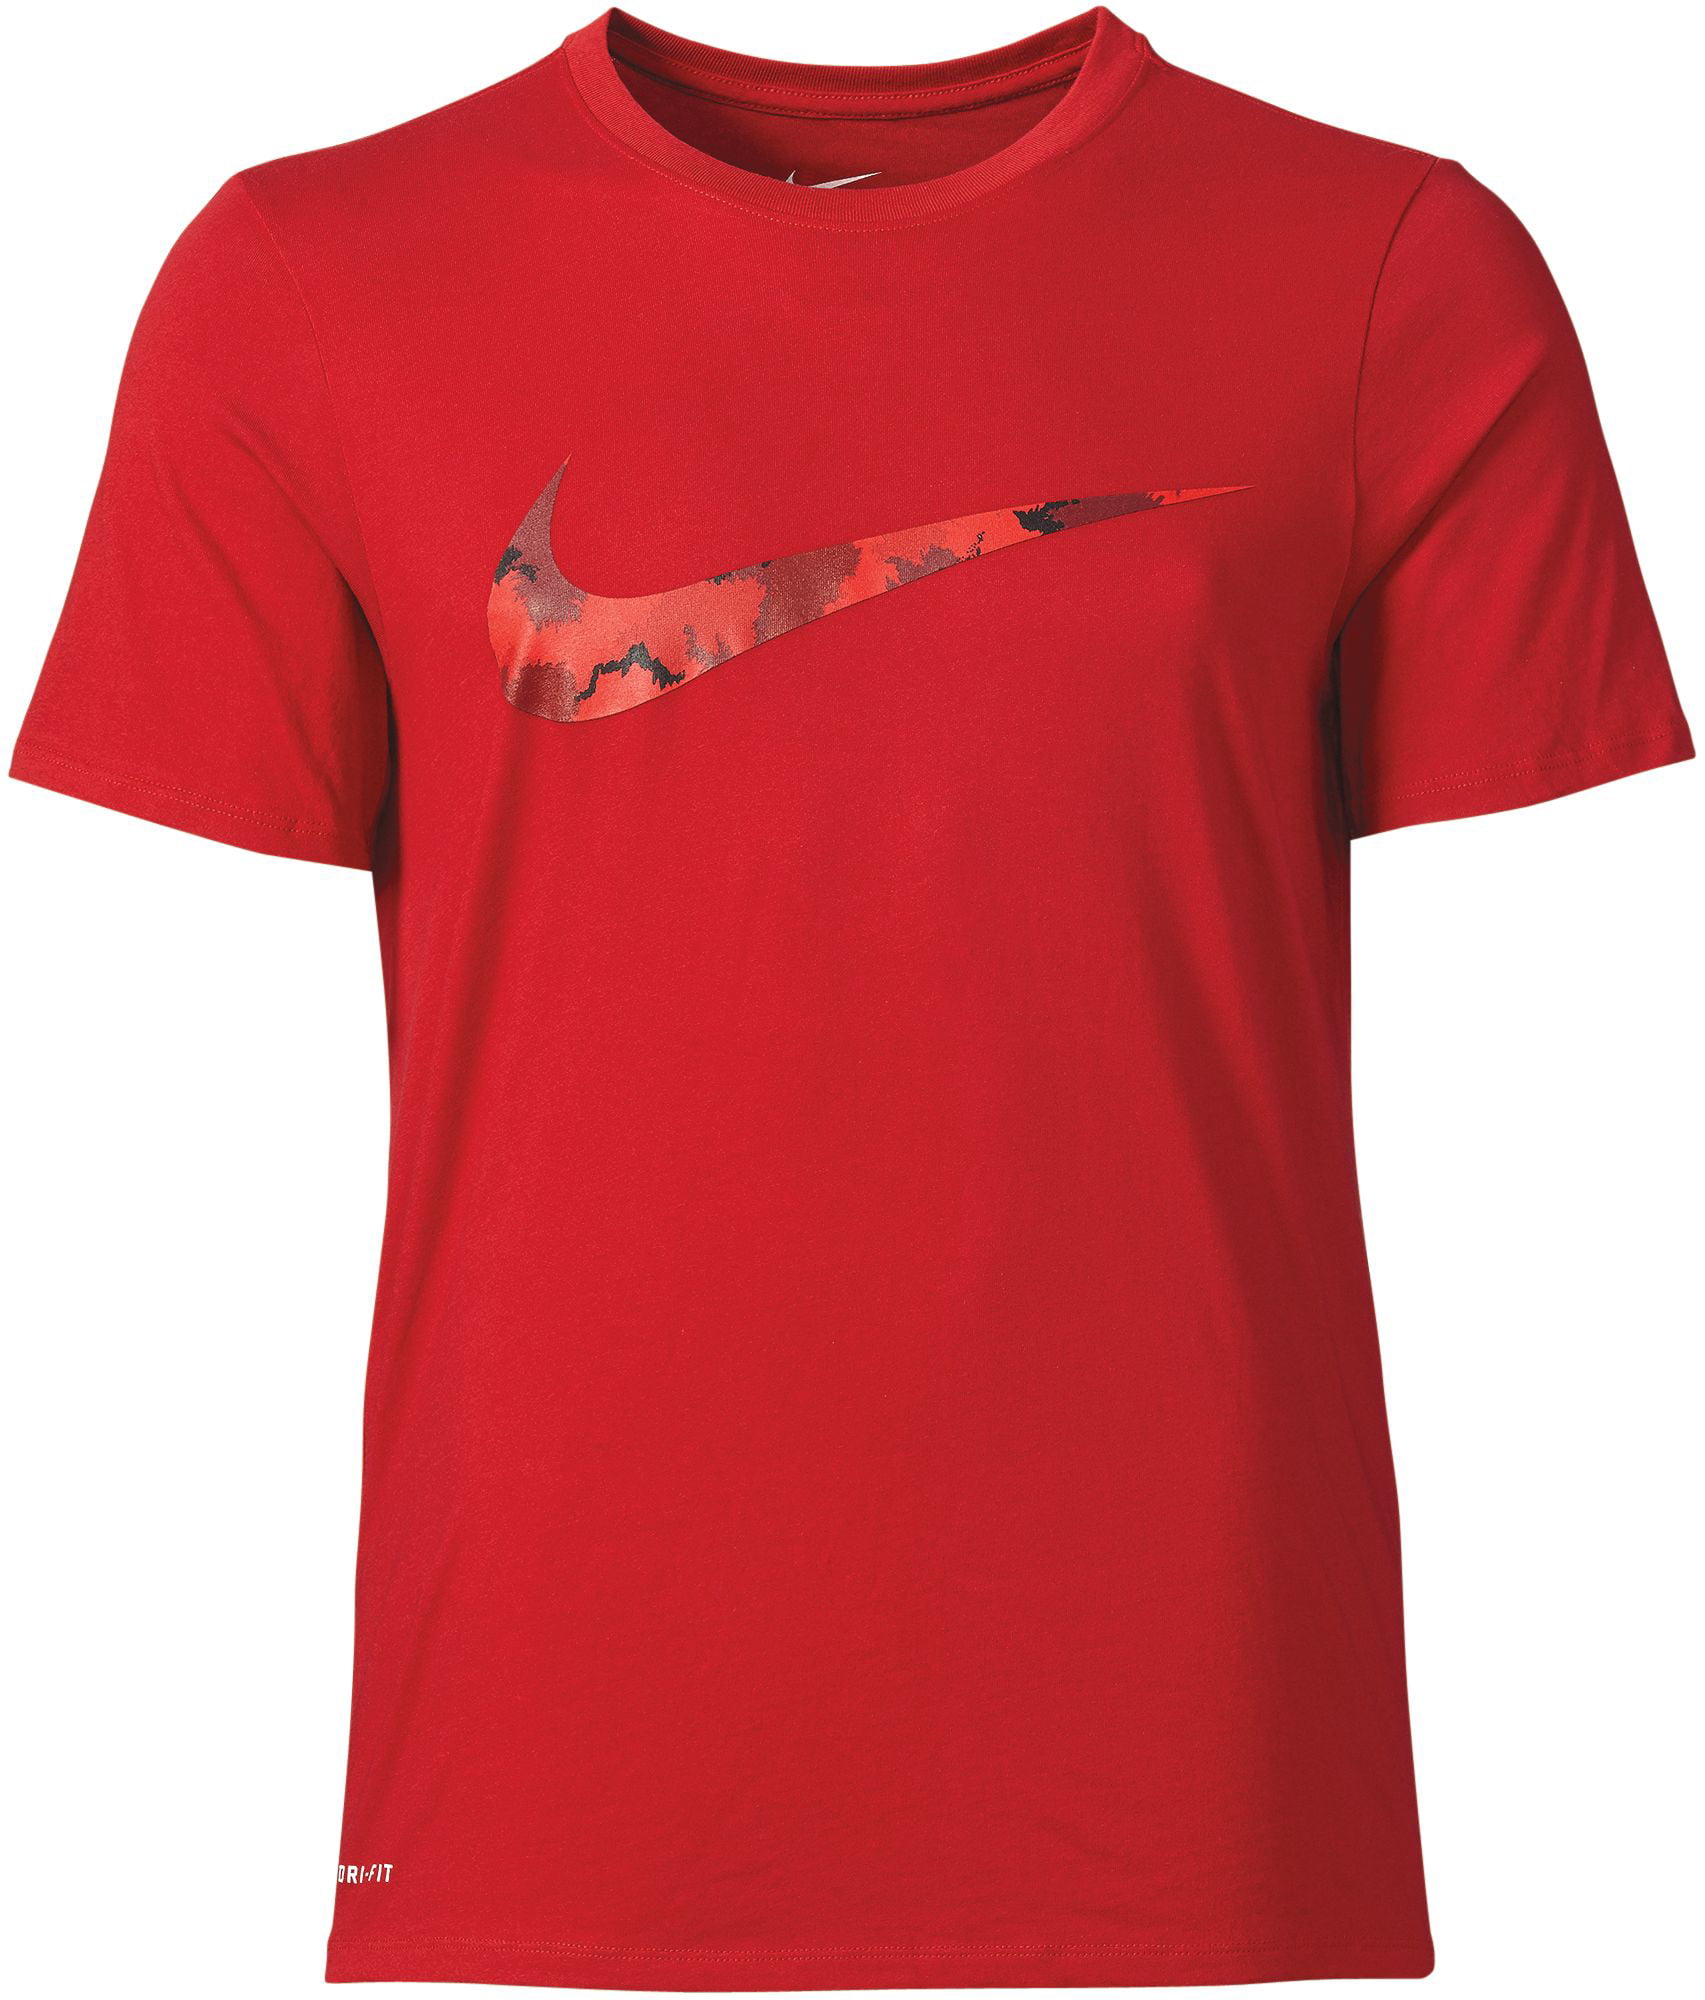 Nike - Nike Men's Dri-Fit Camo Swoosh Graphic T-Shirt-Red - Walmart.com ...